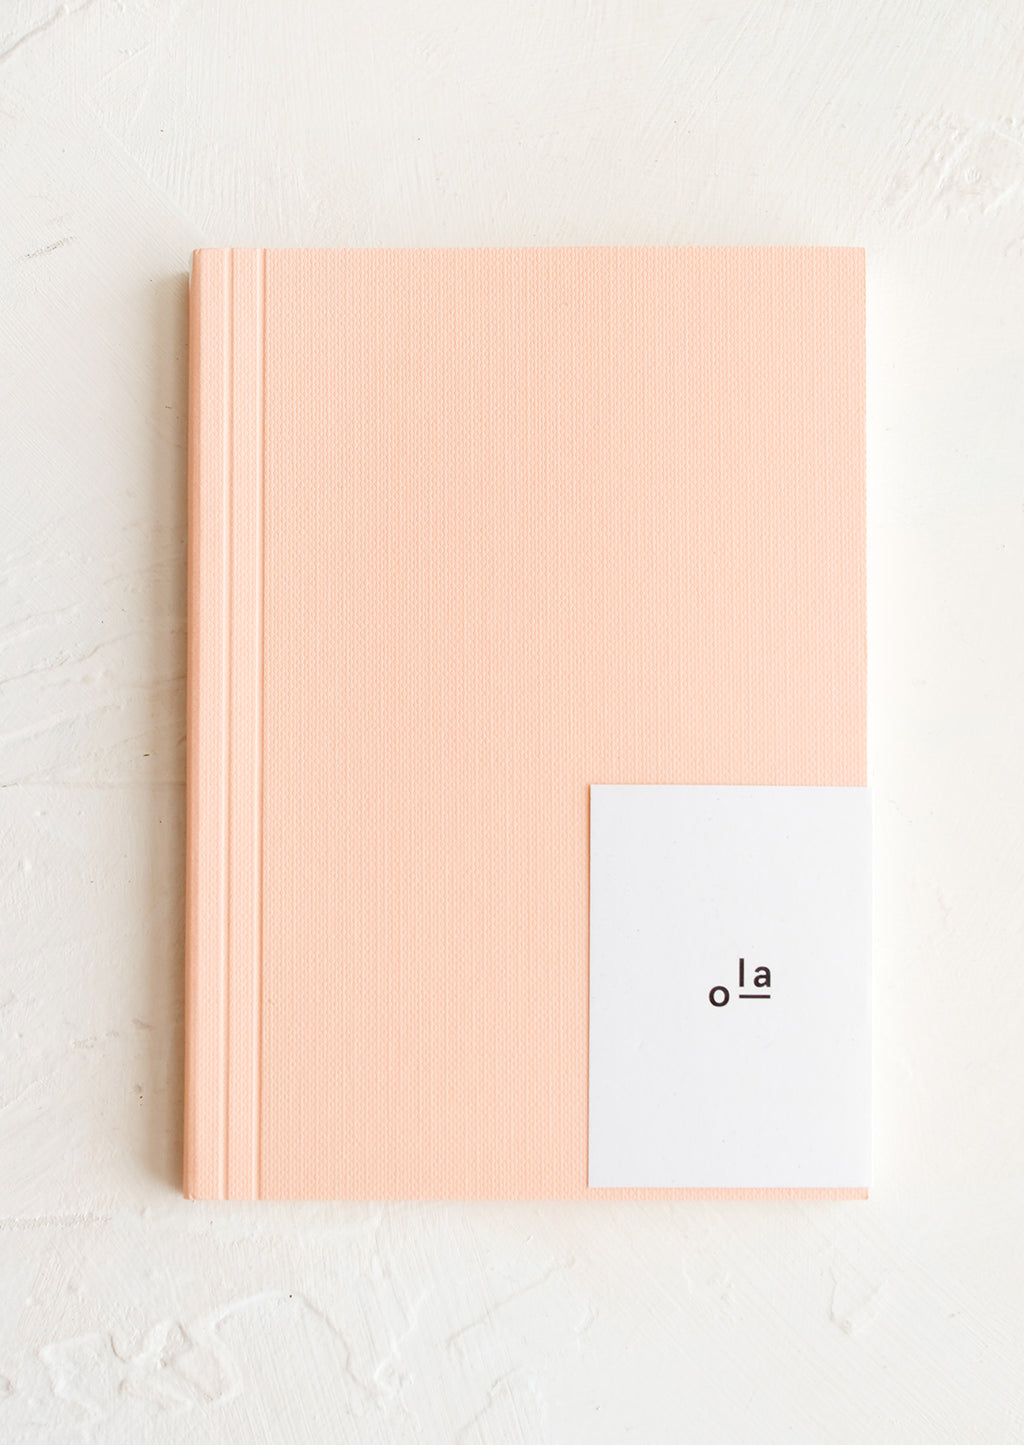 Small / Peach / Unruled: A small peach notebook.